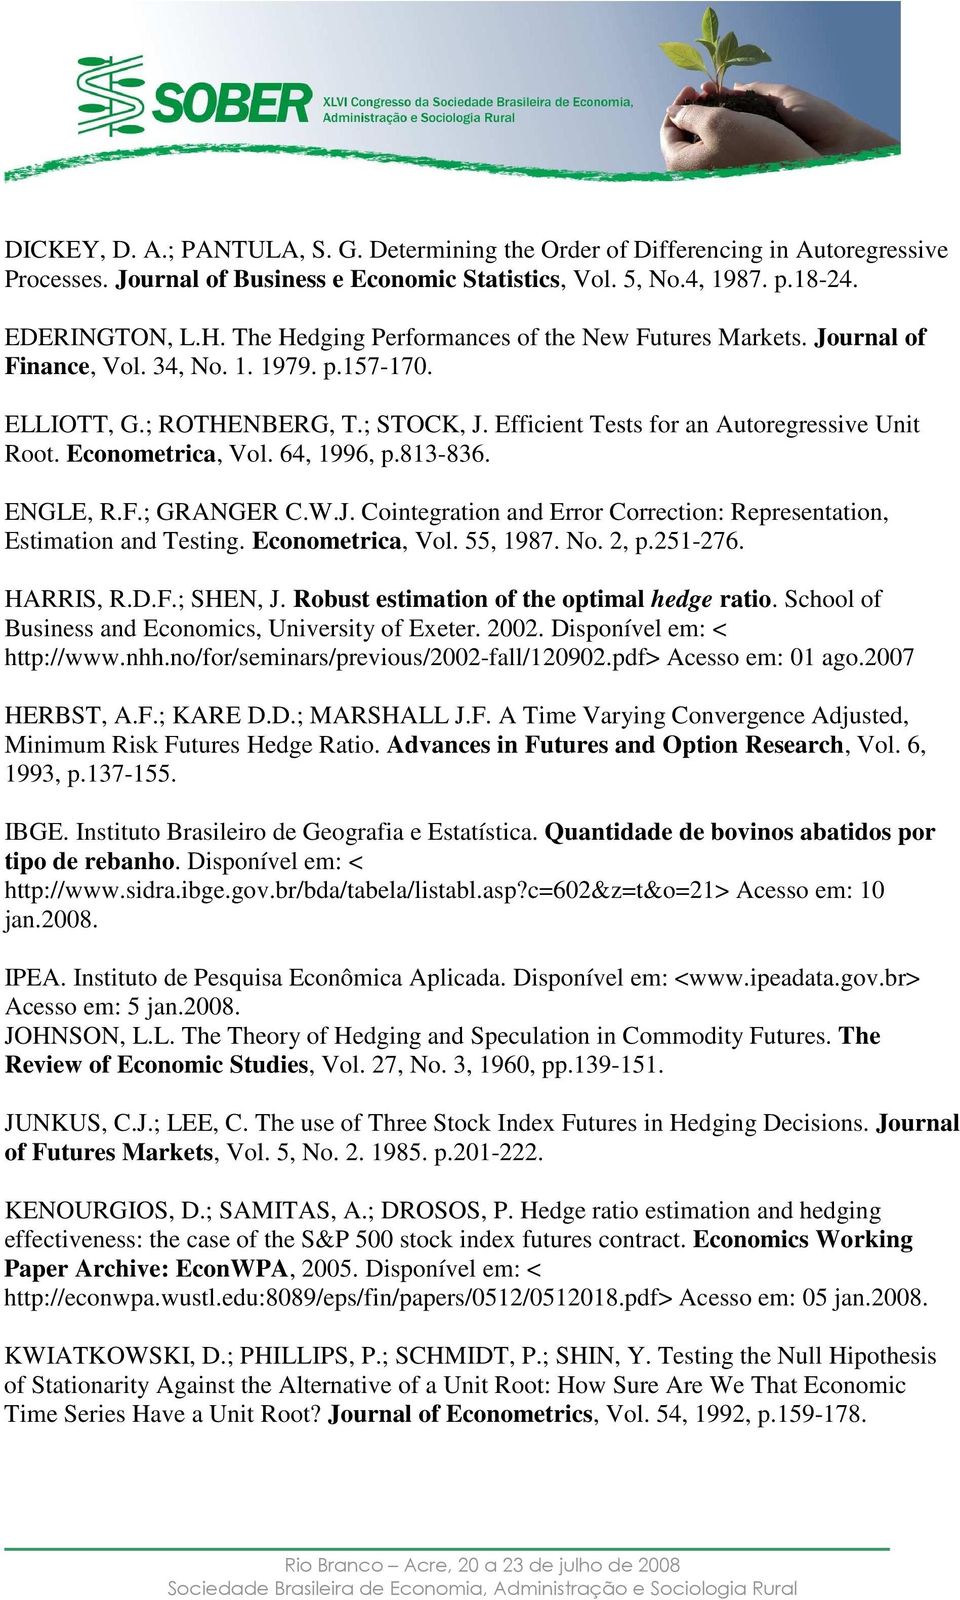 Economerica, Vol. 64, 1996, p.813-836. ENGLE, R.F.; GRANGER C.W.J. Coinegraion and Error Correcion: Represenaion, Esimaion and Tesing. Economerica, Vol. 55, 1987. No. 2, p.251-276. HARRIS, R.D.F.; SHEN, J.